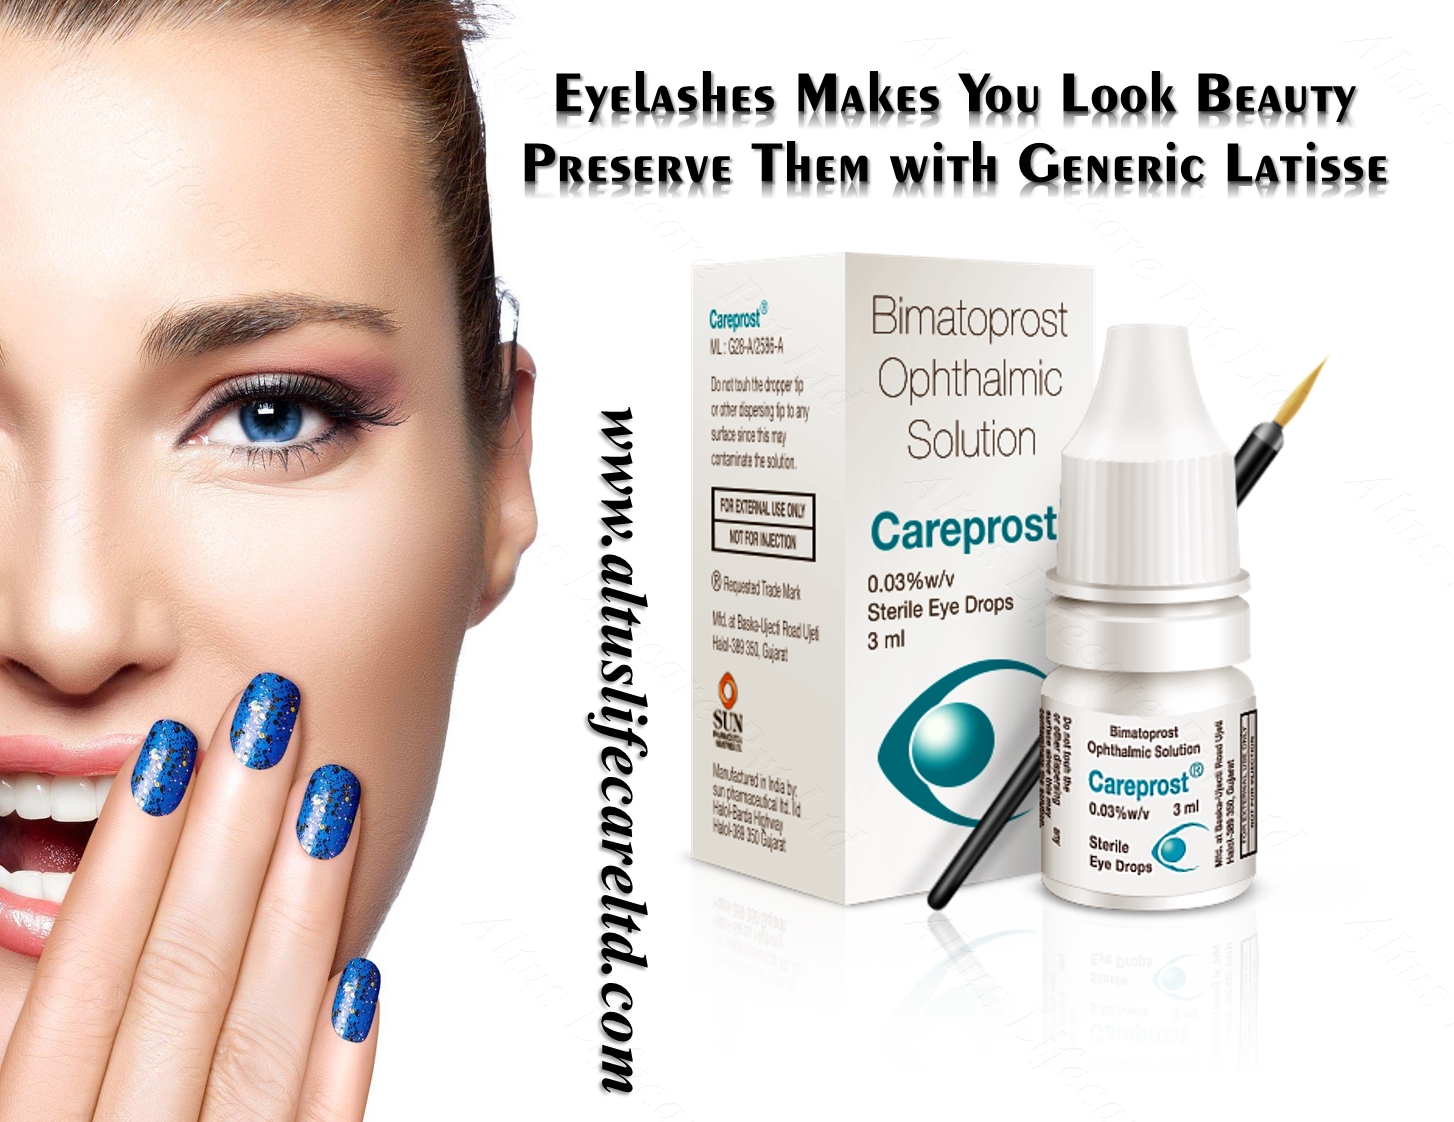 Buy Bimatoprost online and enjoy Double Safety of your Eyes | Careprost 0.03%